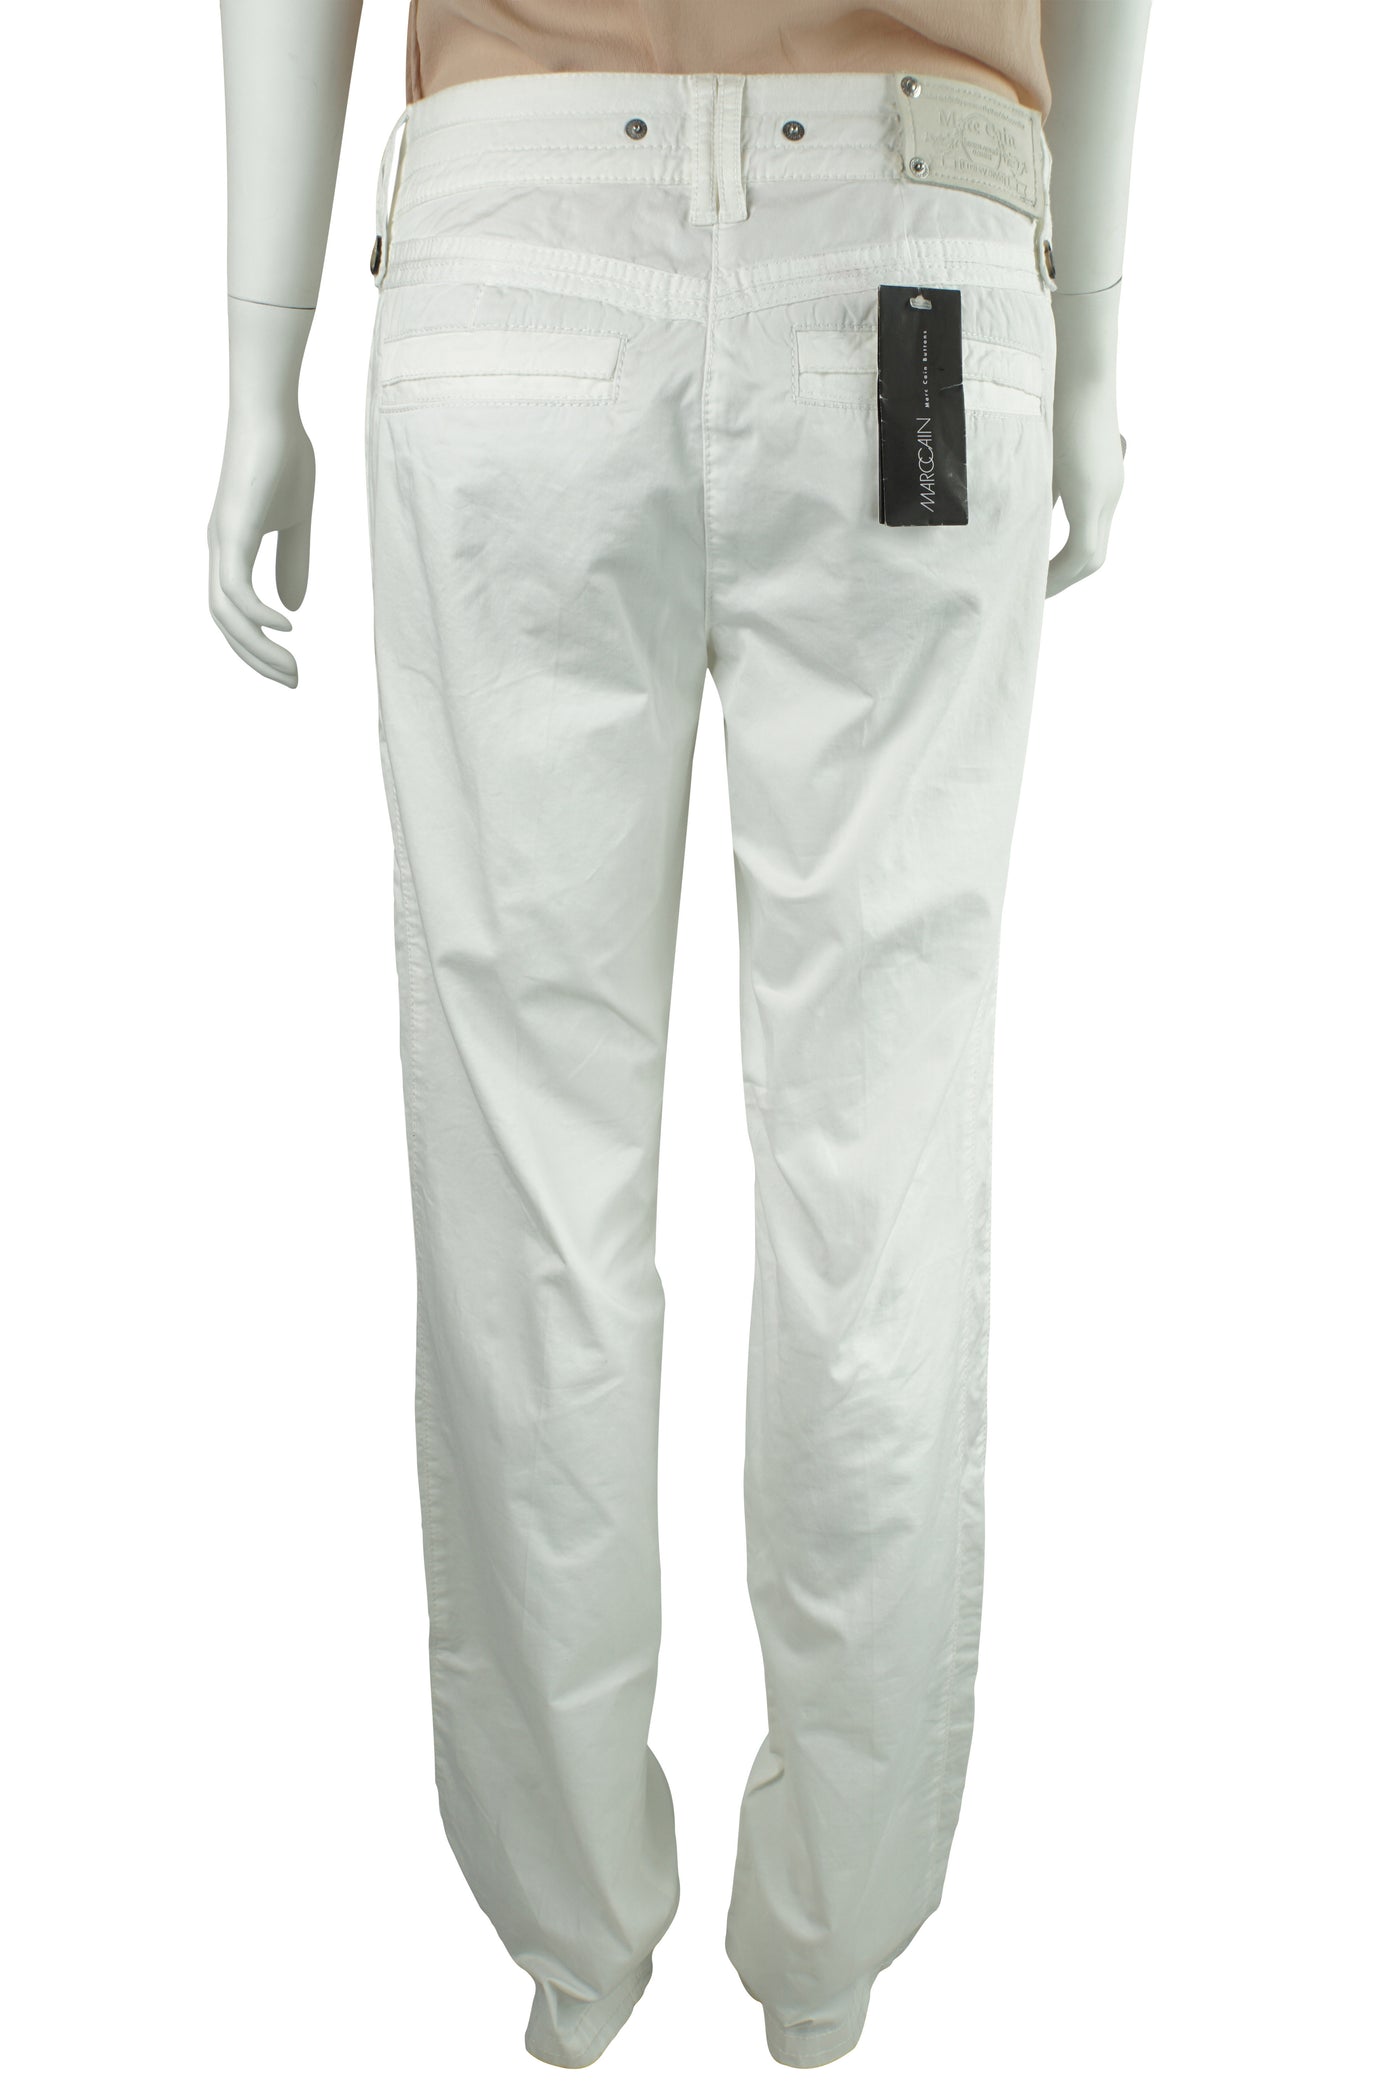 Four pocket white trousers